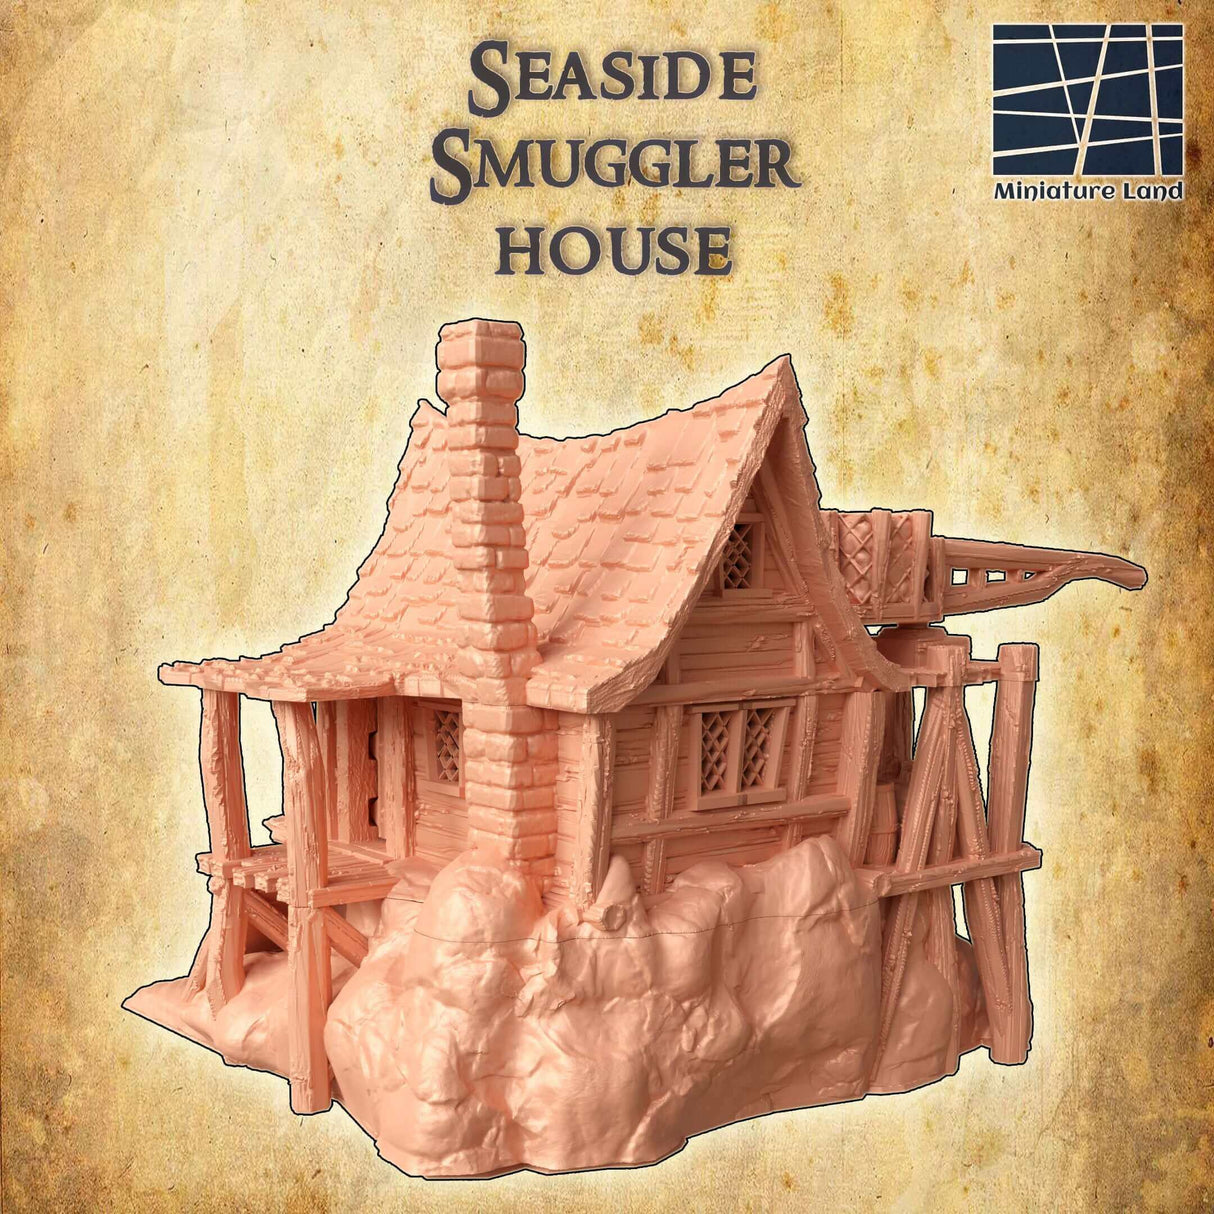 Unbemaltes 3D-Modell von Seaside Smuggler House für individuelle Gestaltung